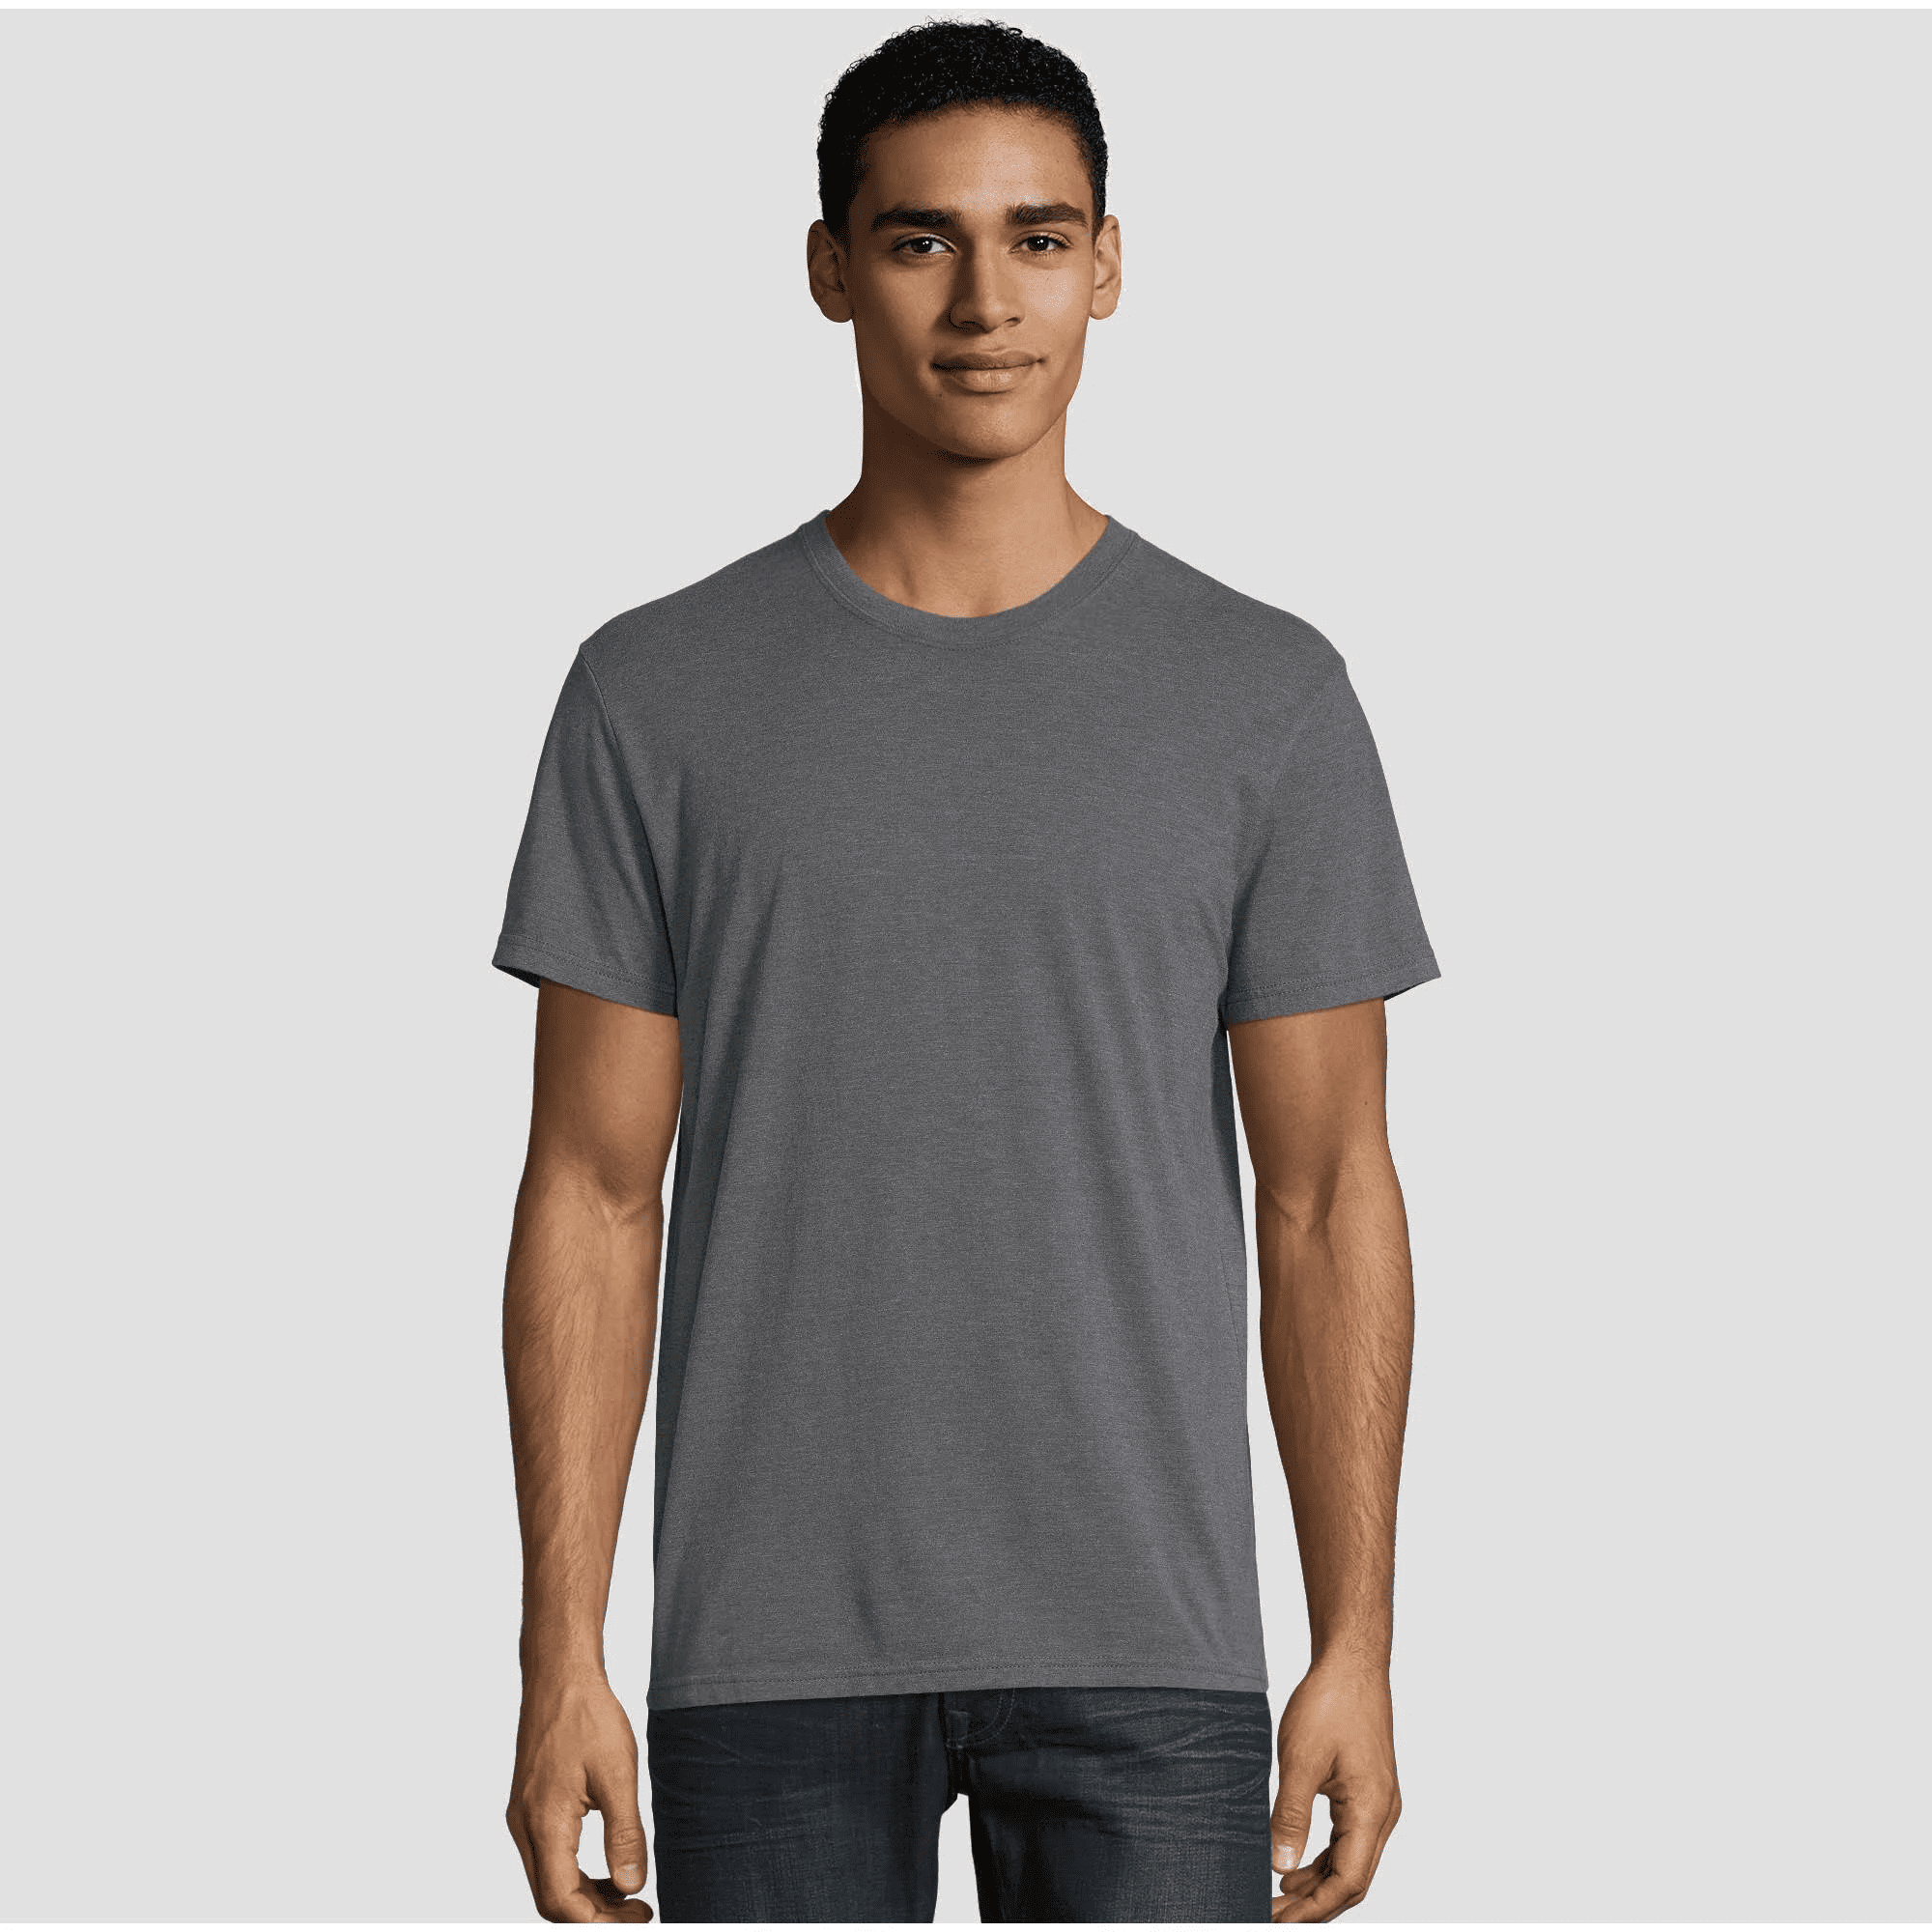 Hanes Premium Short Sleeve Black Label Crew T-Shirt - Charcoal Heather, Large - Walmart.com